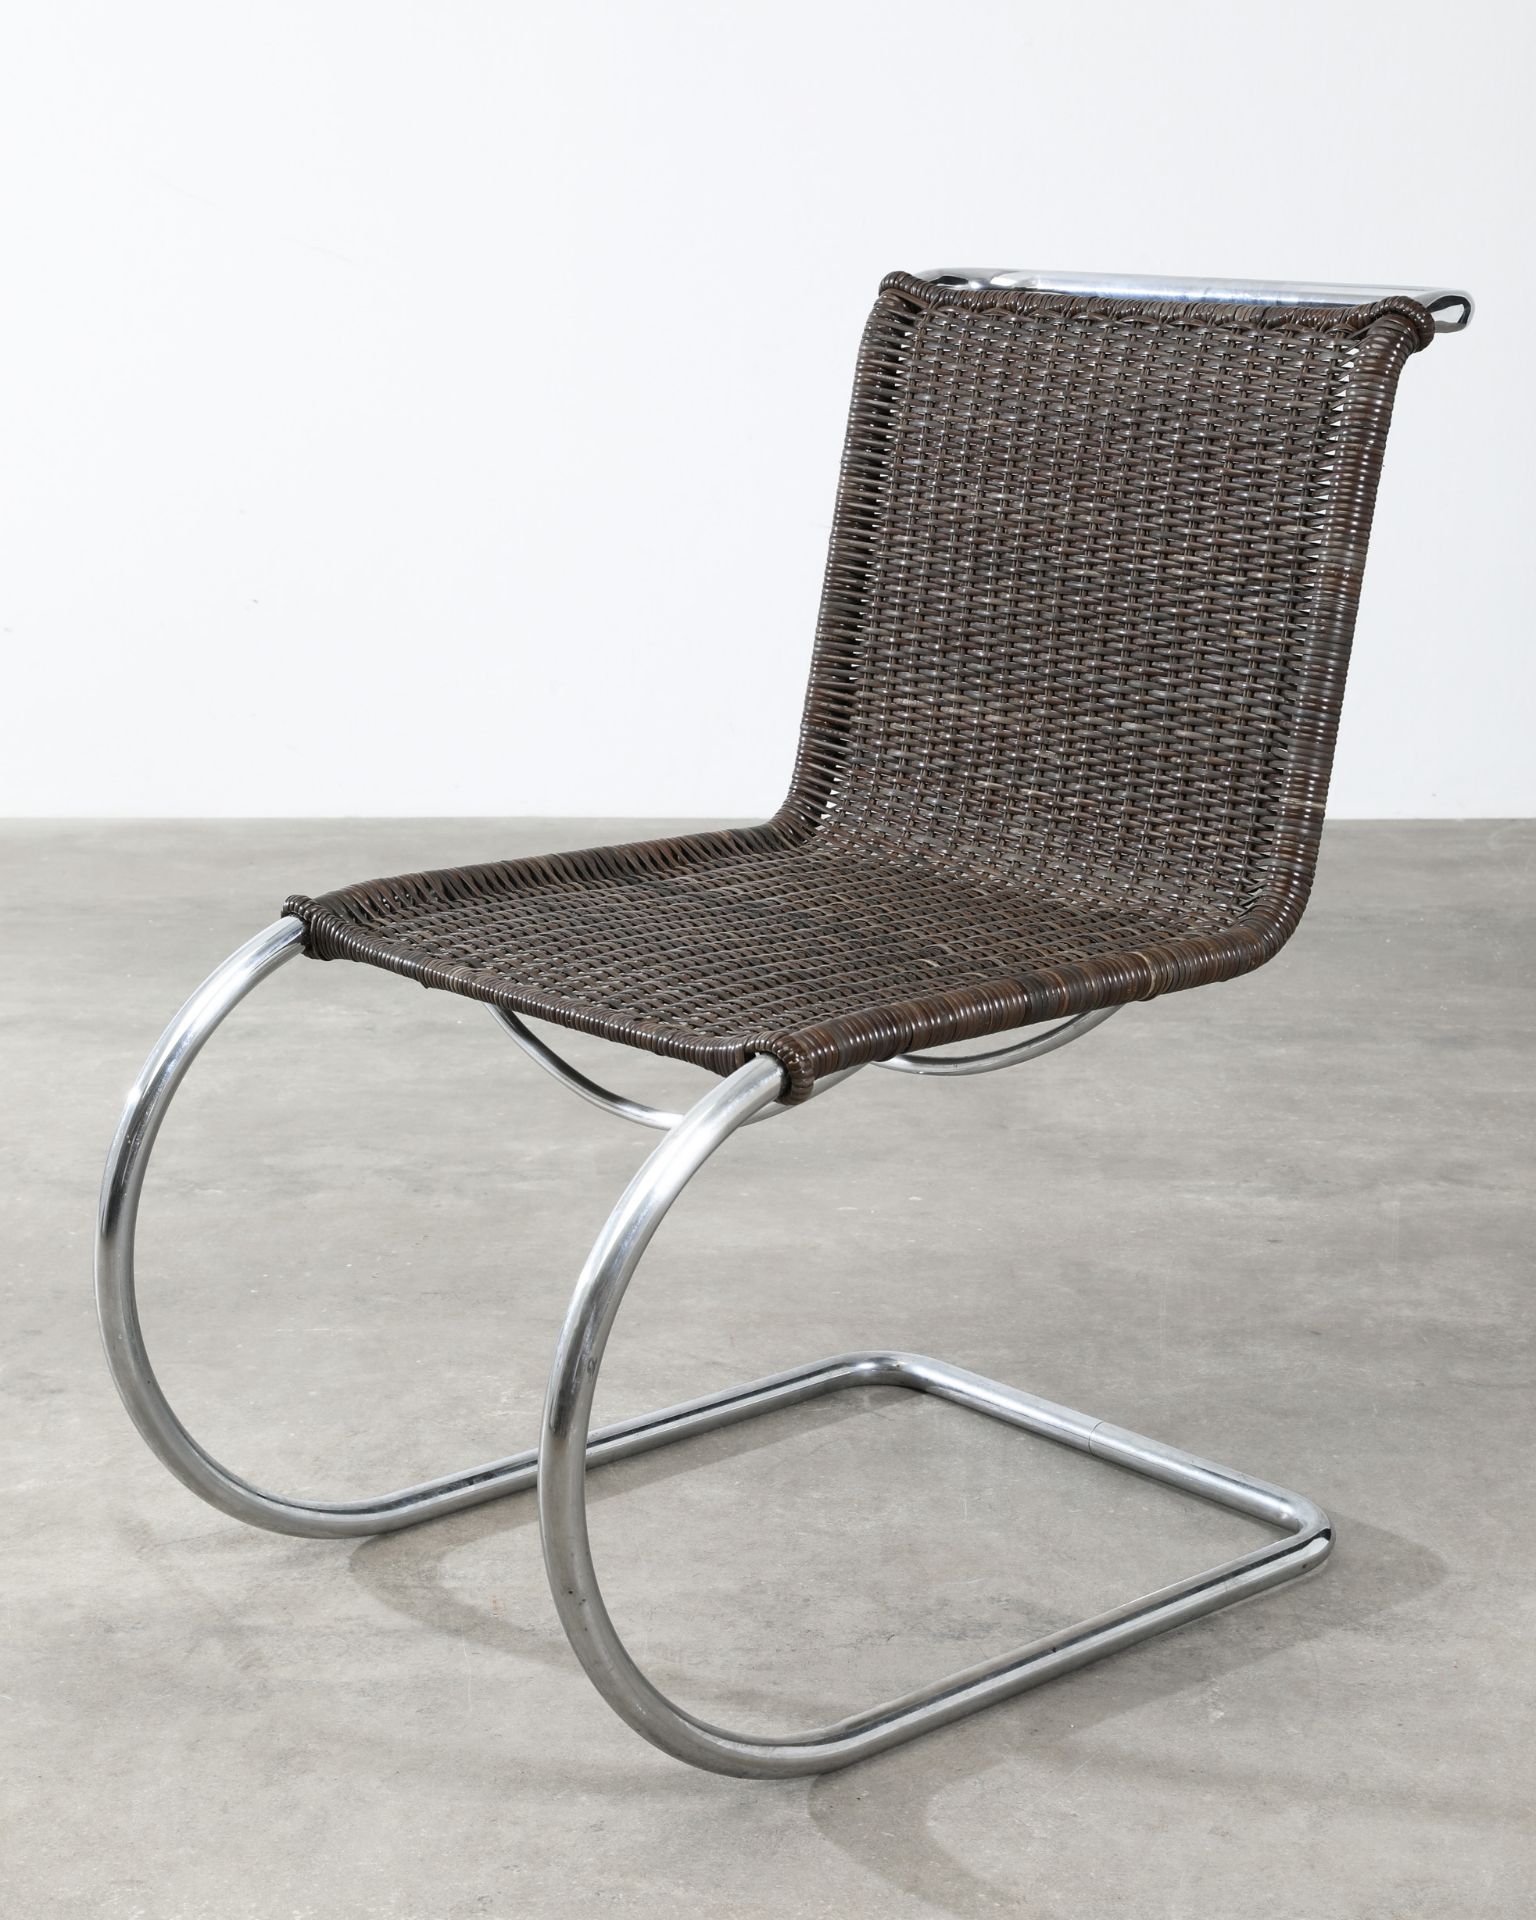 L. Mies van der Rohe, Thonet, Chair Model MR10 / MR533